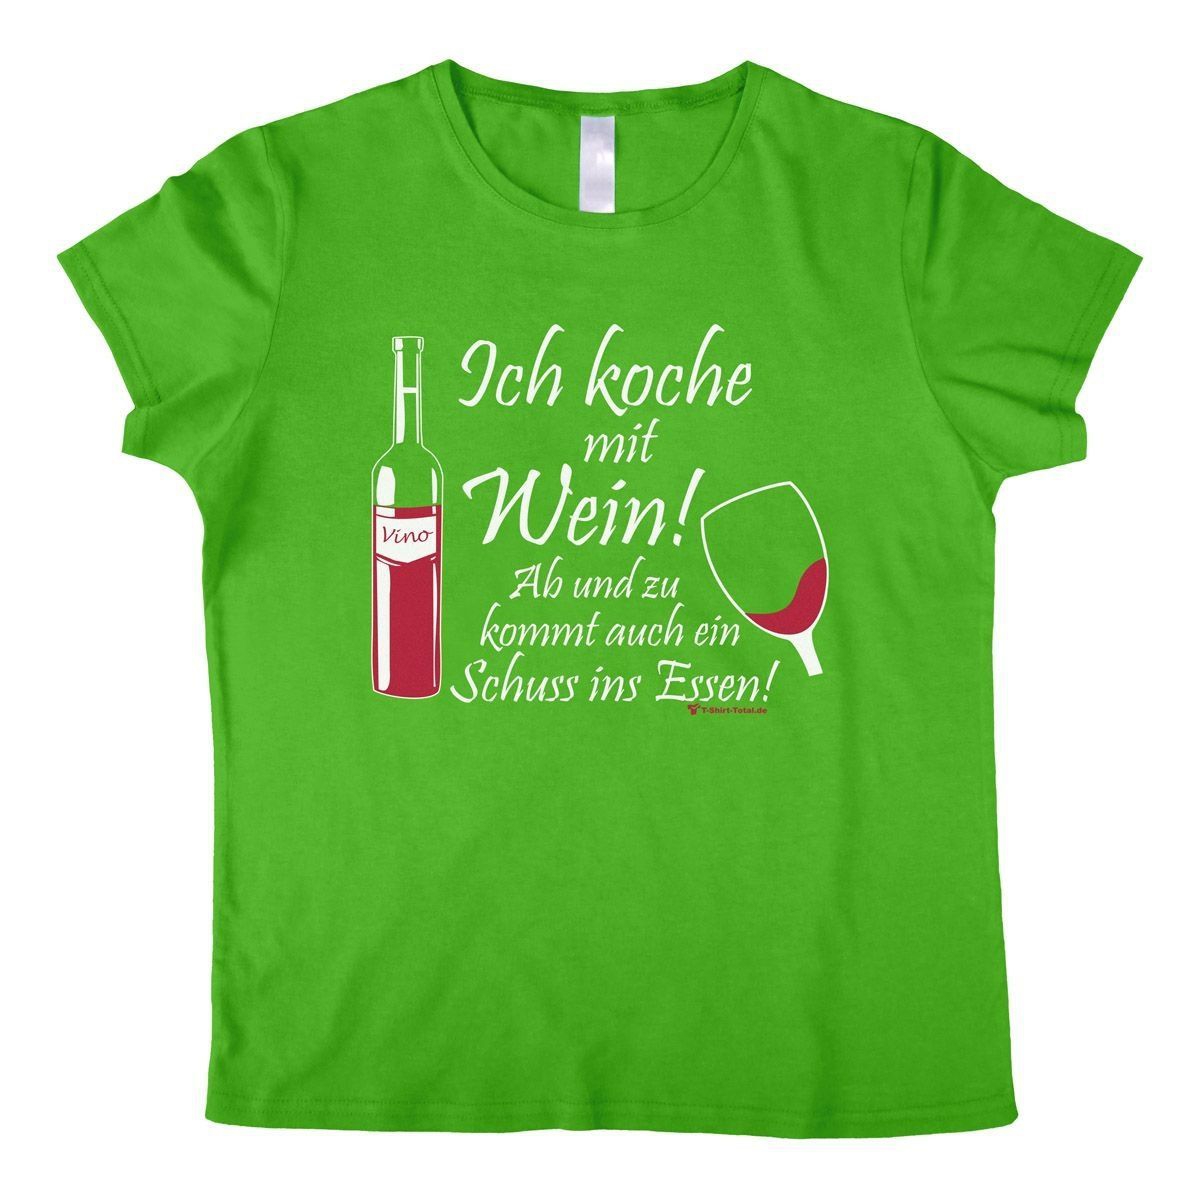 Koche mit Wein Woman T-Shirt grün Large